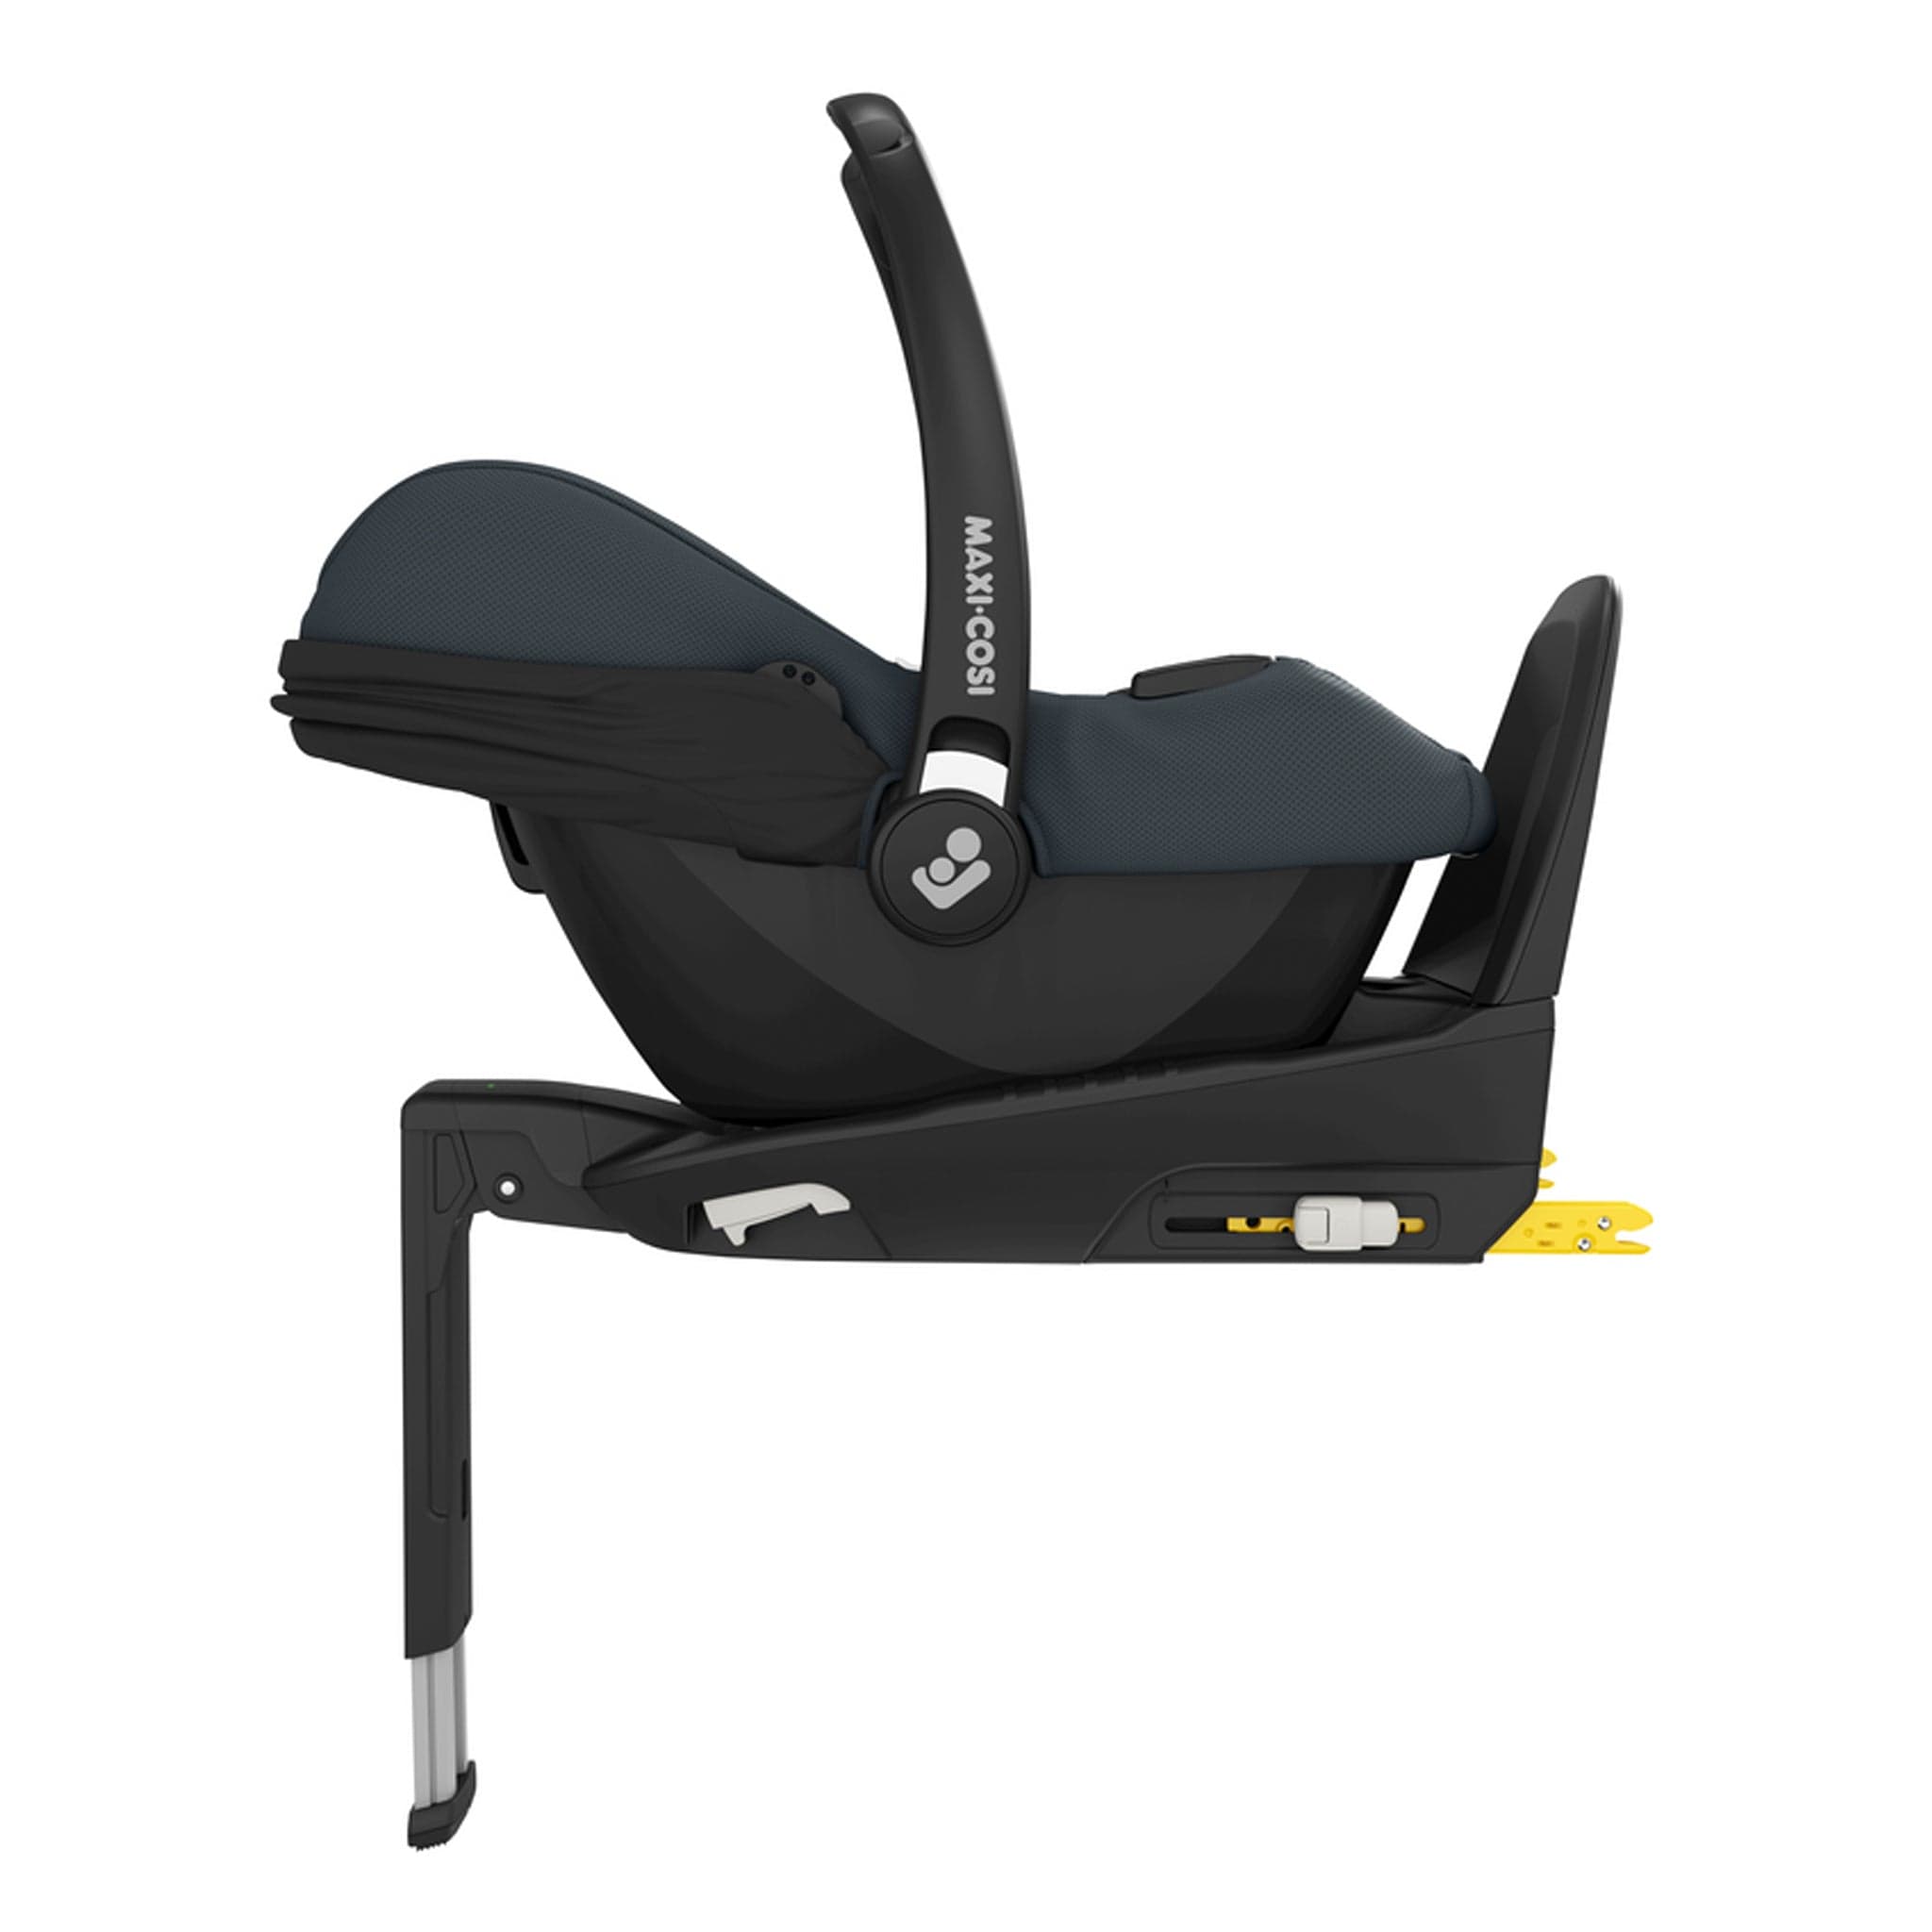 Maxi-Cosi i-Size car seats Maxi-Cosi CabrioFix i-Size Car Seat with Base in Essential Graphite CAB-GRA-10974